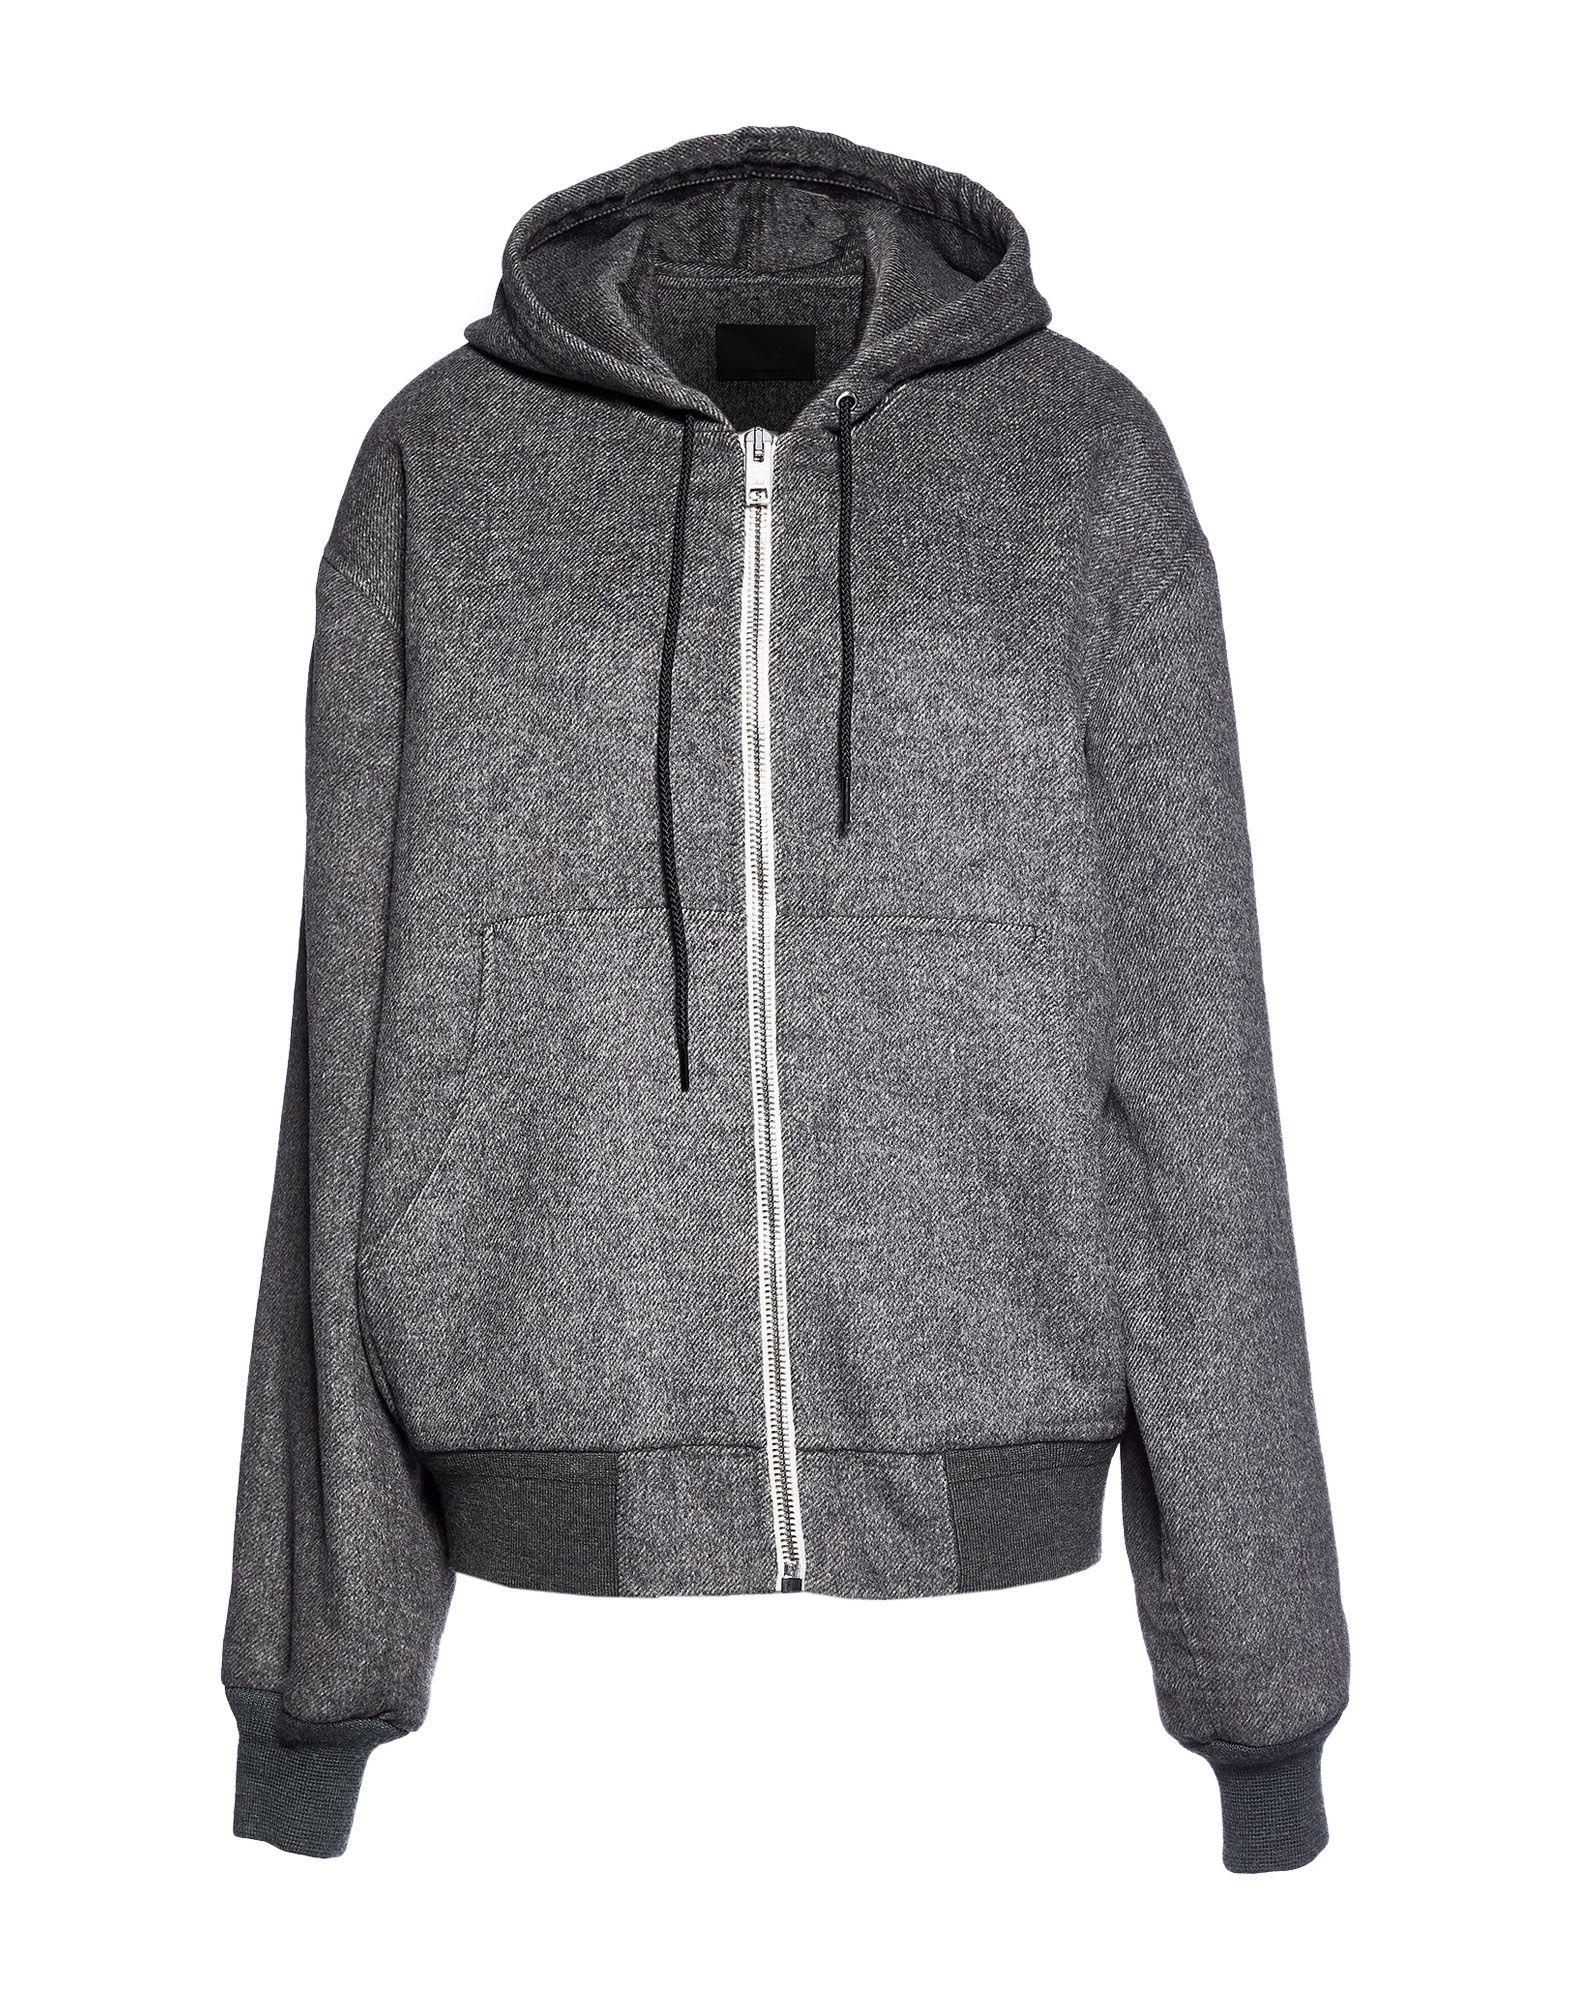 Alexander Wang Synthetic Sweatshirt in Grey (Gray) - Lyst